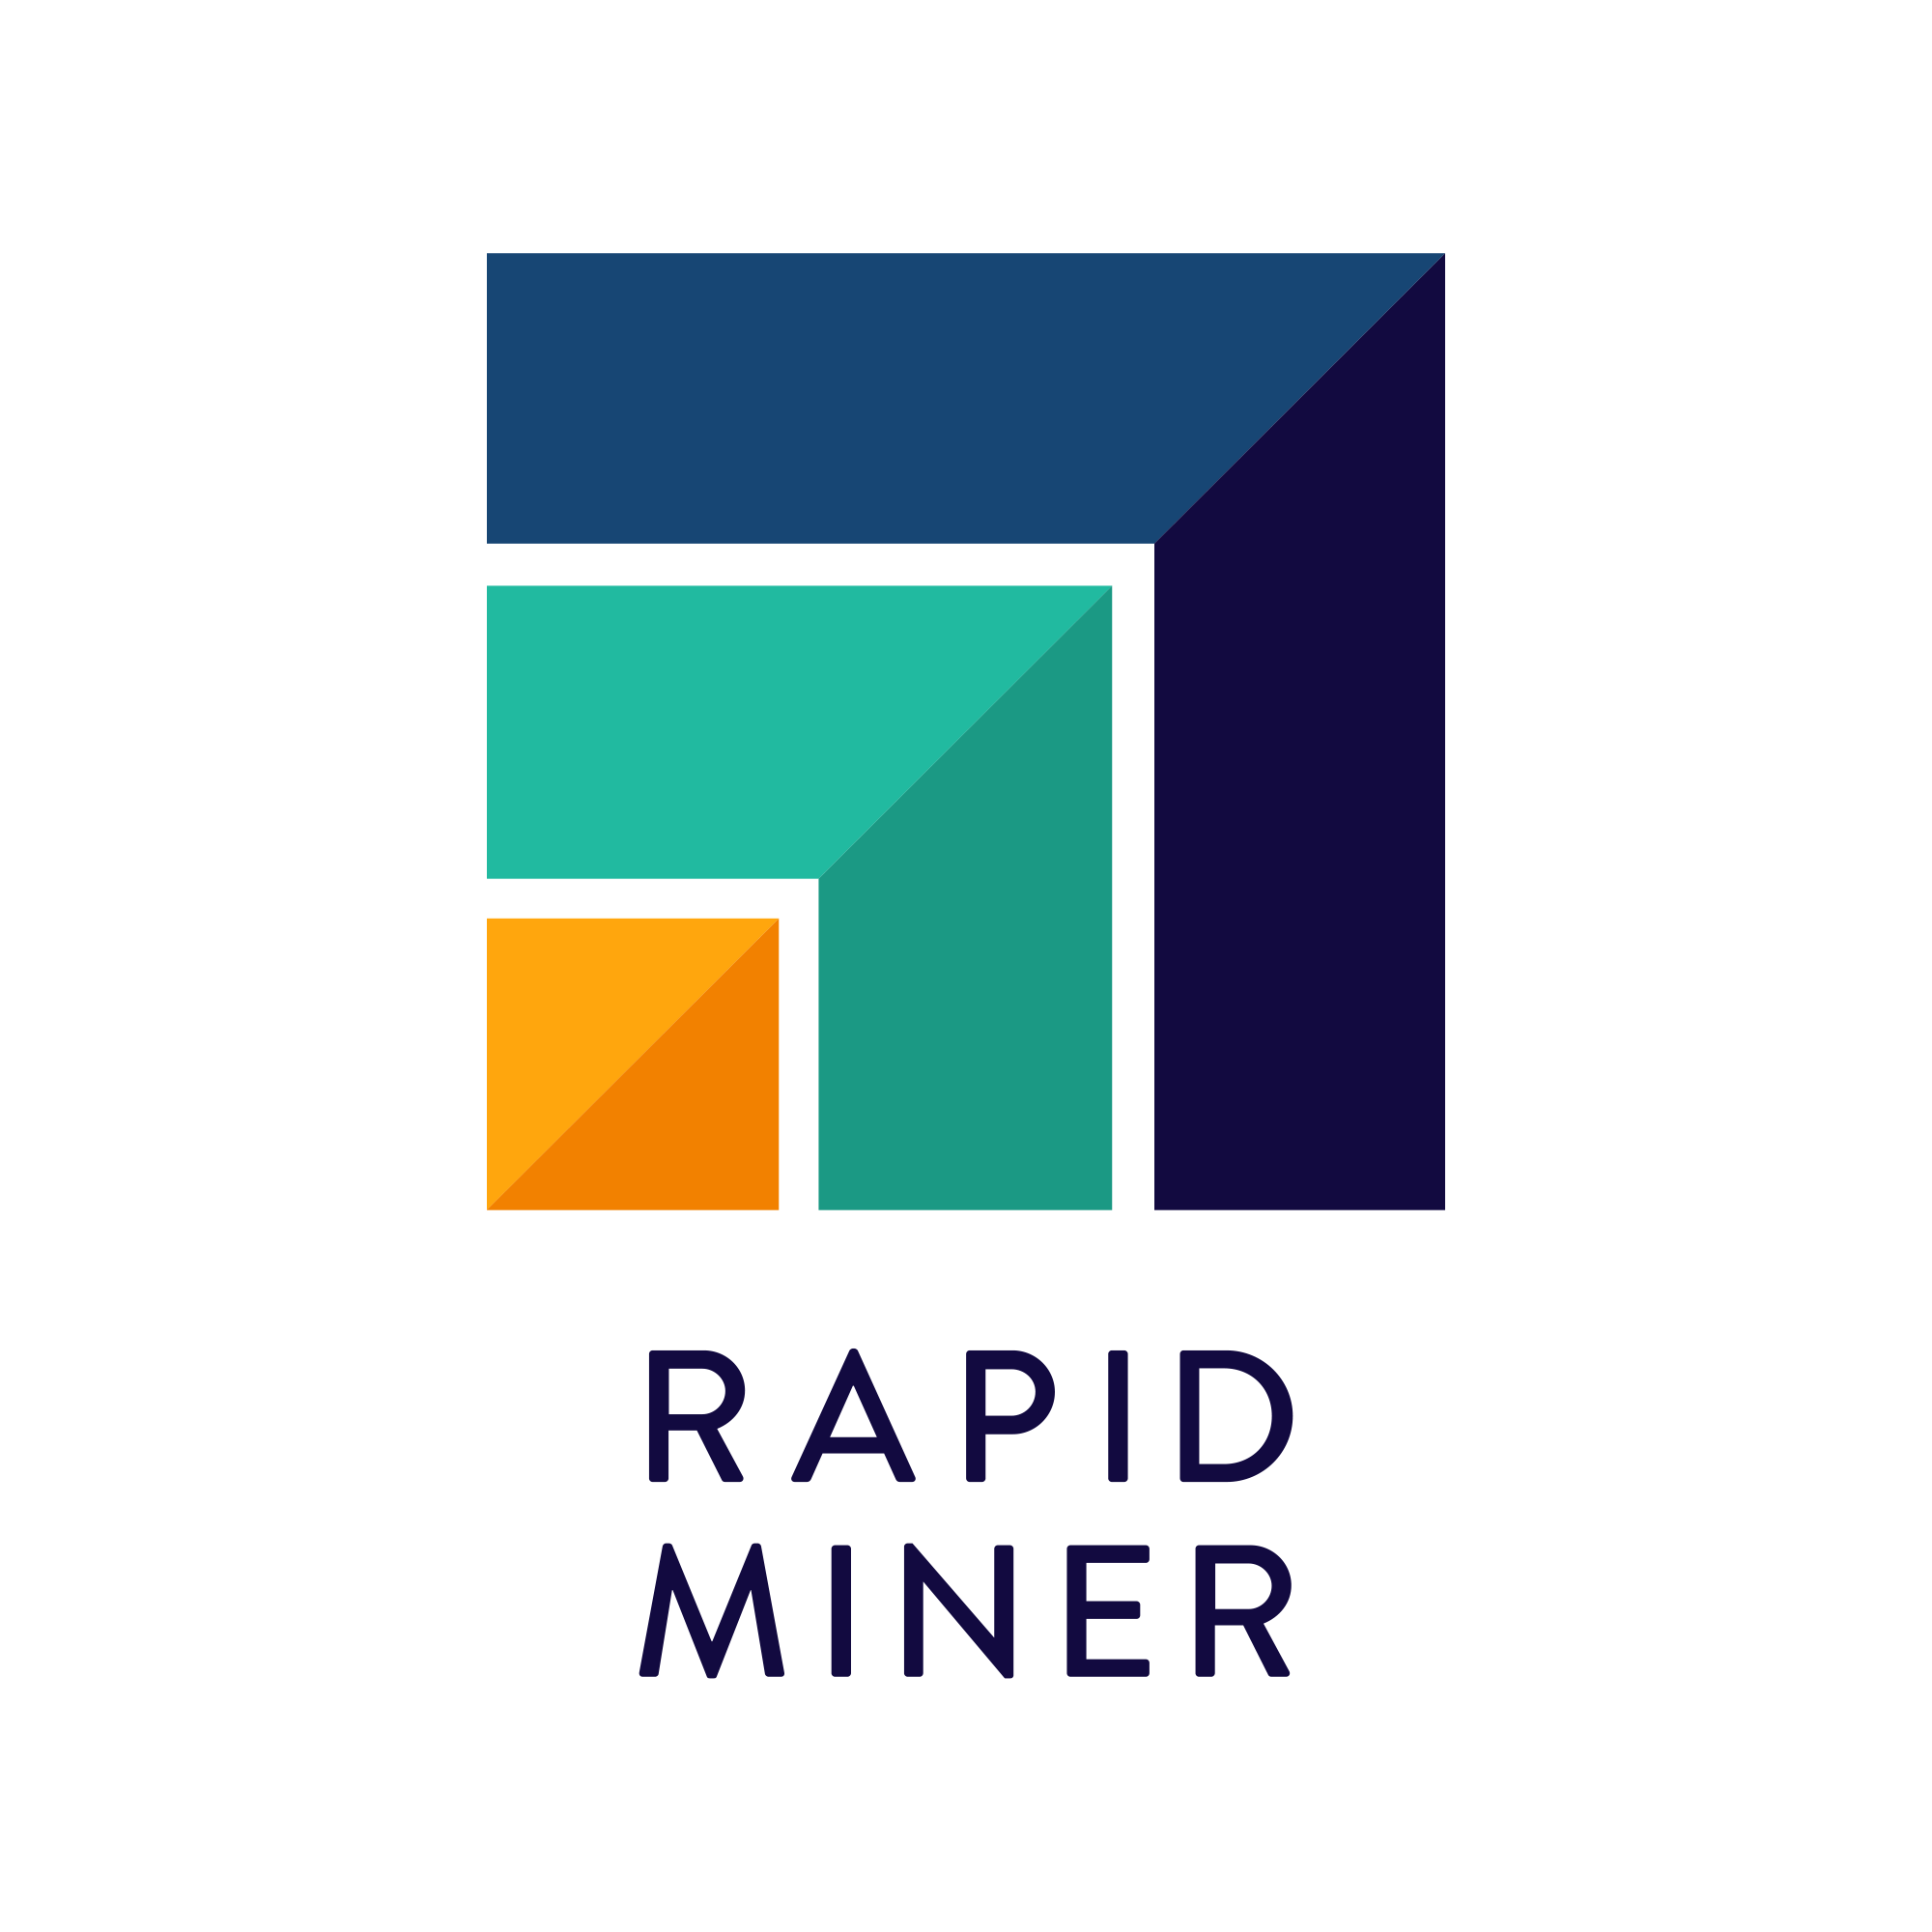 rapidminer_logo